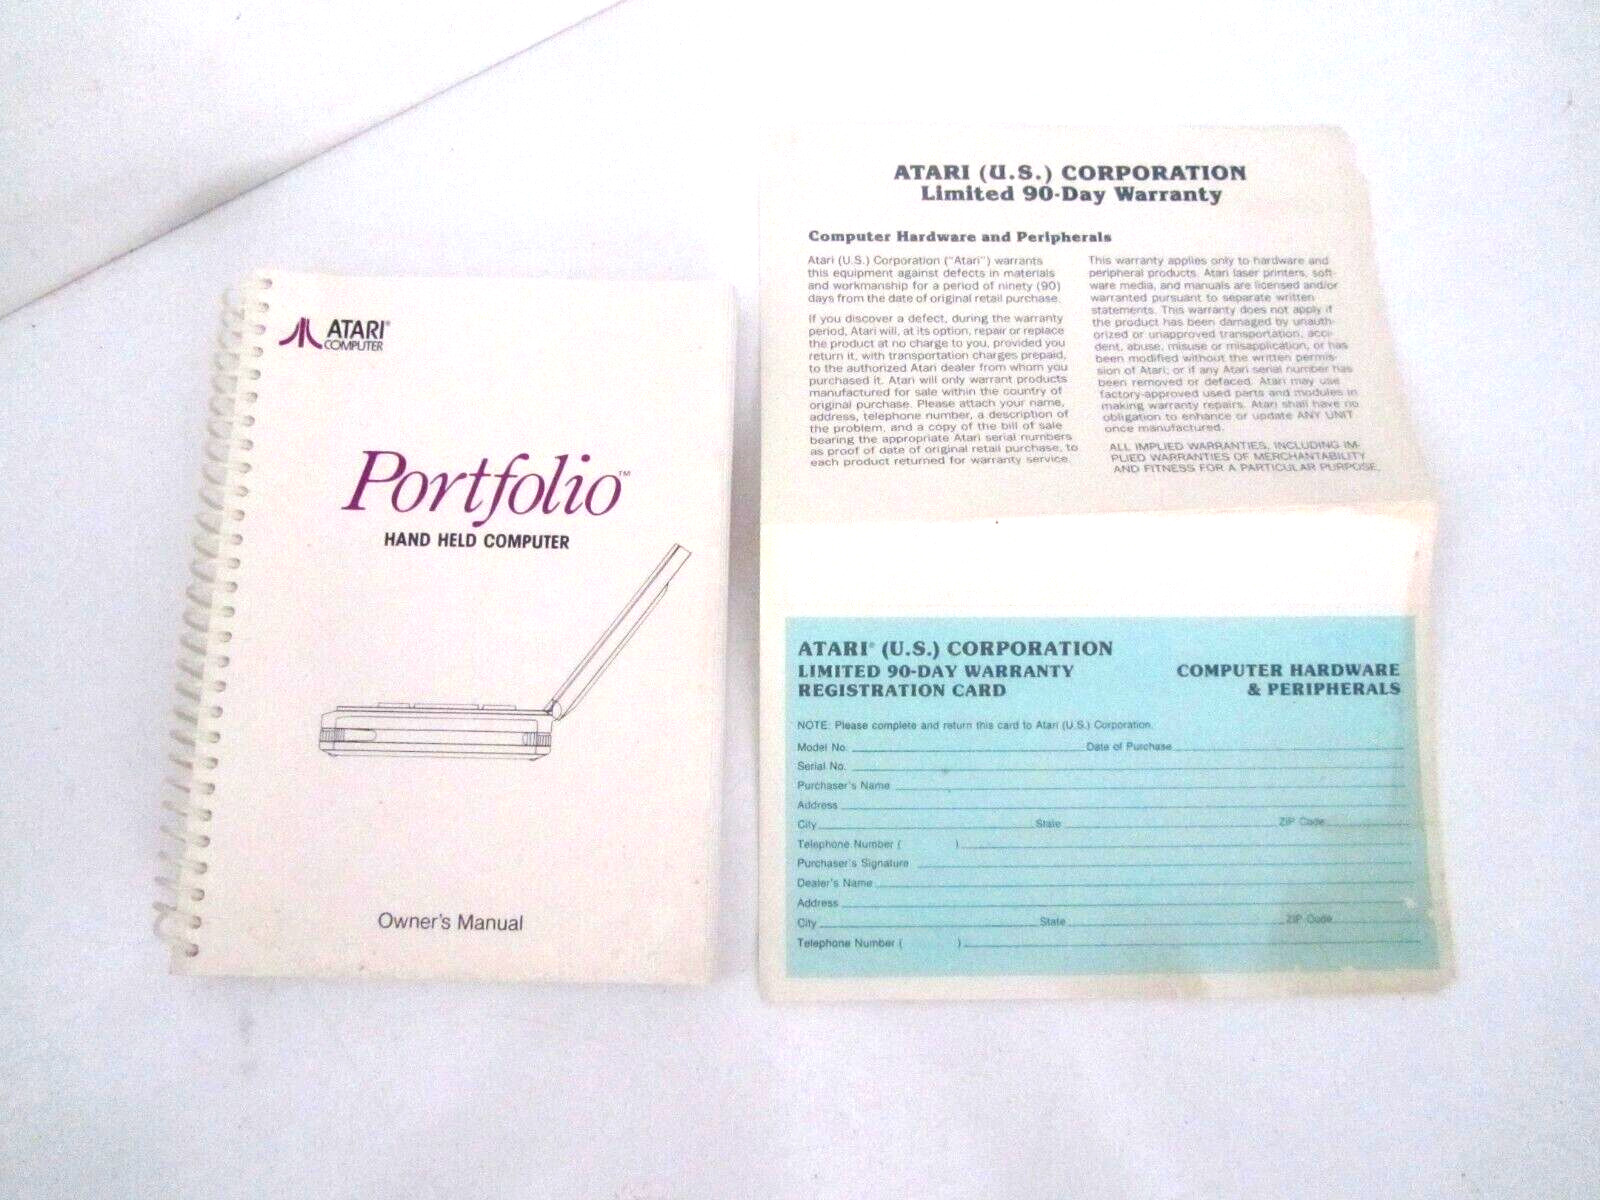 ATARI Portfolio HPC-004 Hand Held Computer Owner's Manual C300851-001  REV. C